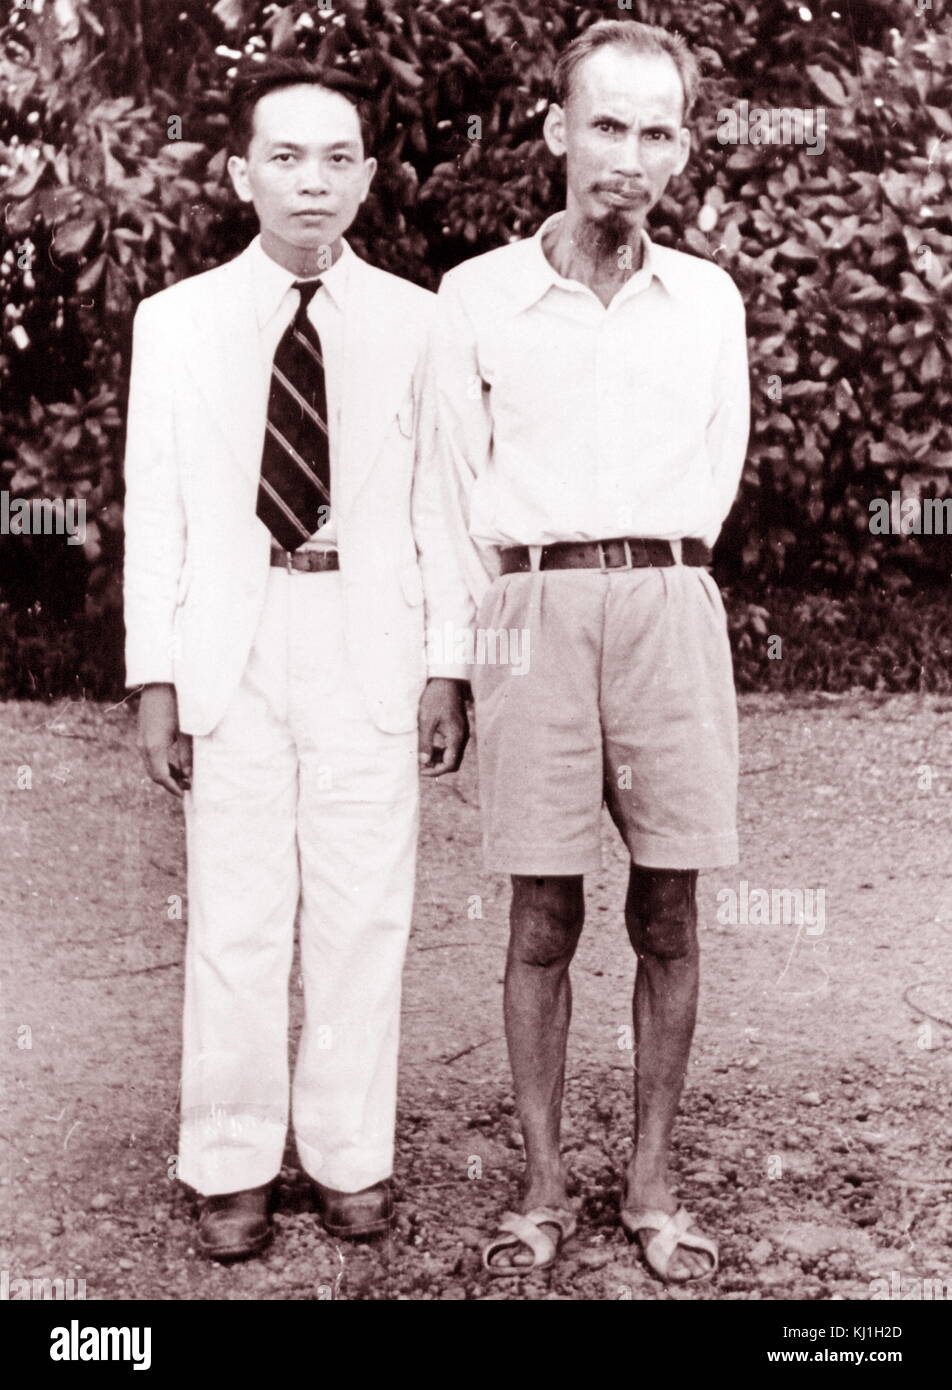 Võ Nguyên Giáp (1911 – 2013) commander of the Vietnam People's Army with H? Chí Minh (1890 – 1969), (Right), Vietnamese Communist revolutionary leader, circa 1954 Stock Photo